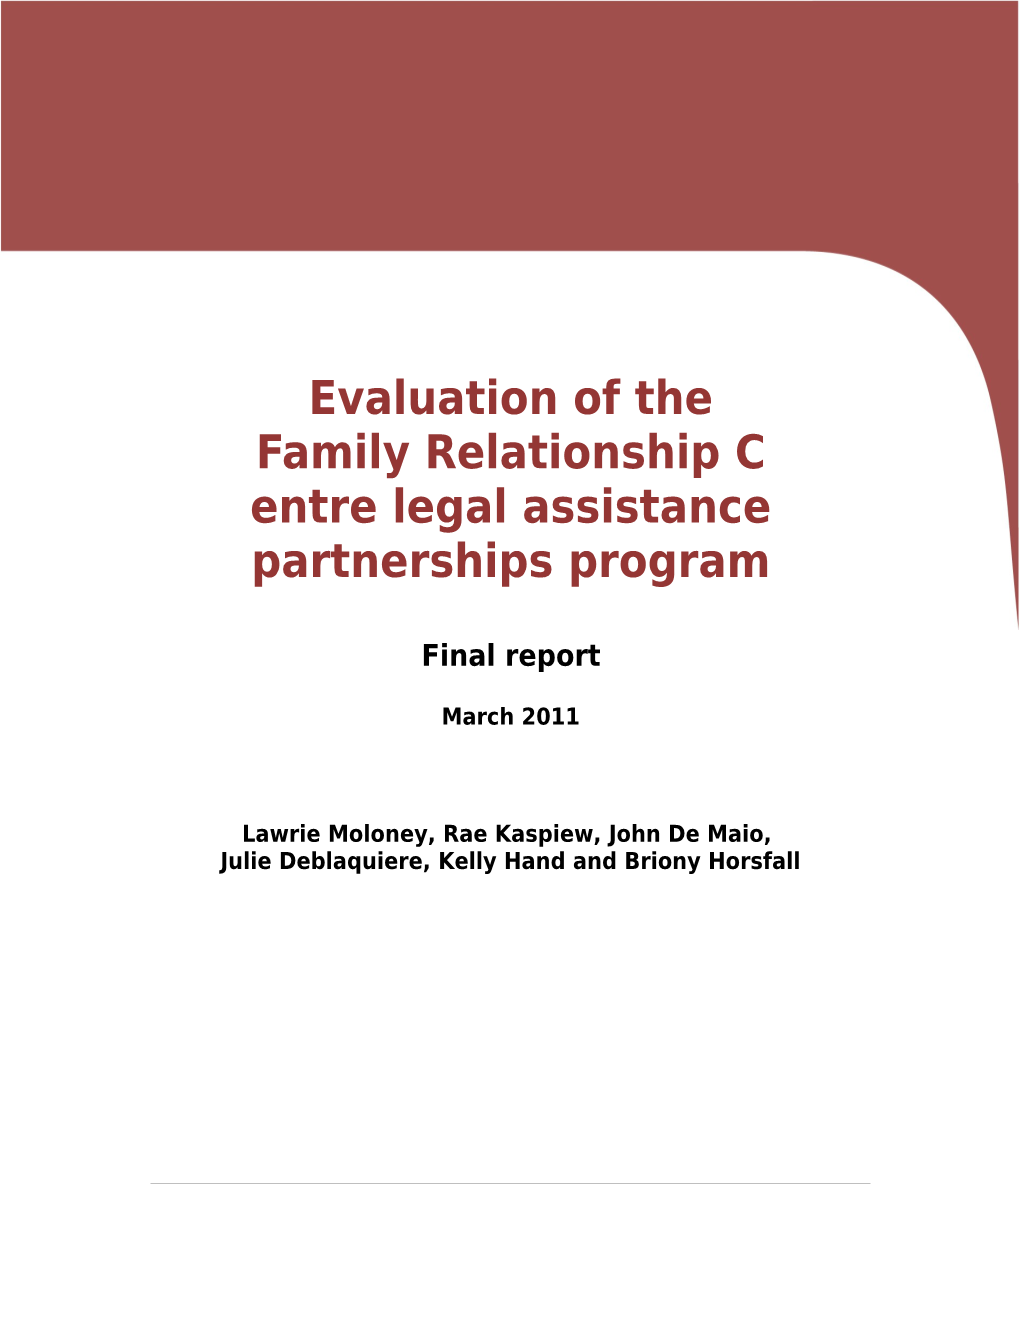 Evaluation of Thefamily Relationship Centre Legal Assistance Partnerships Program